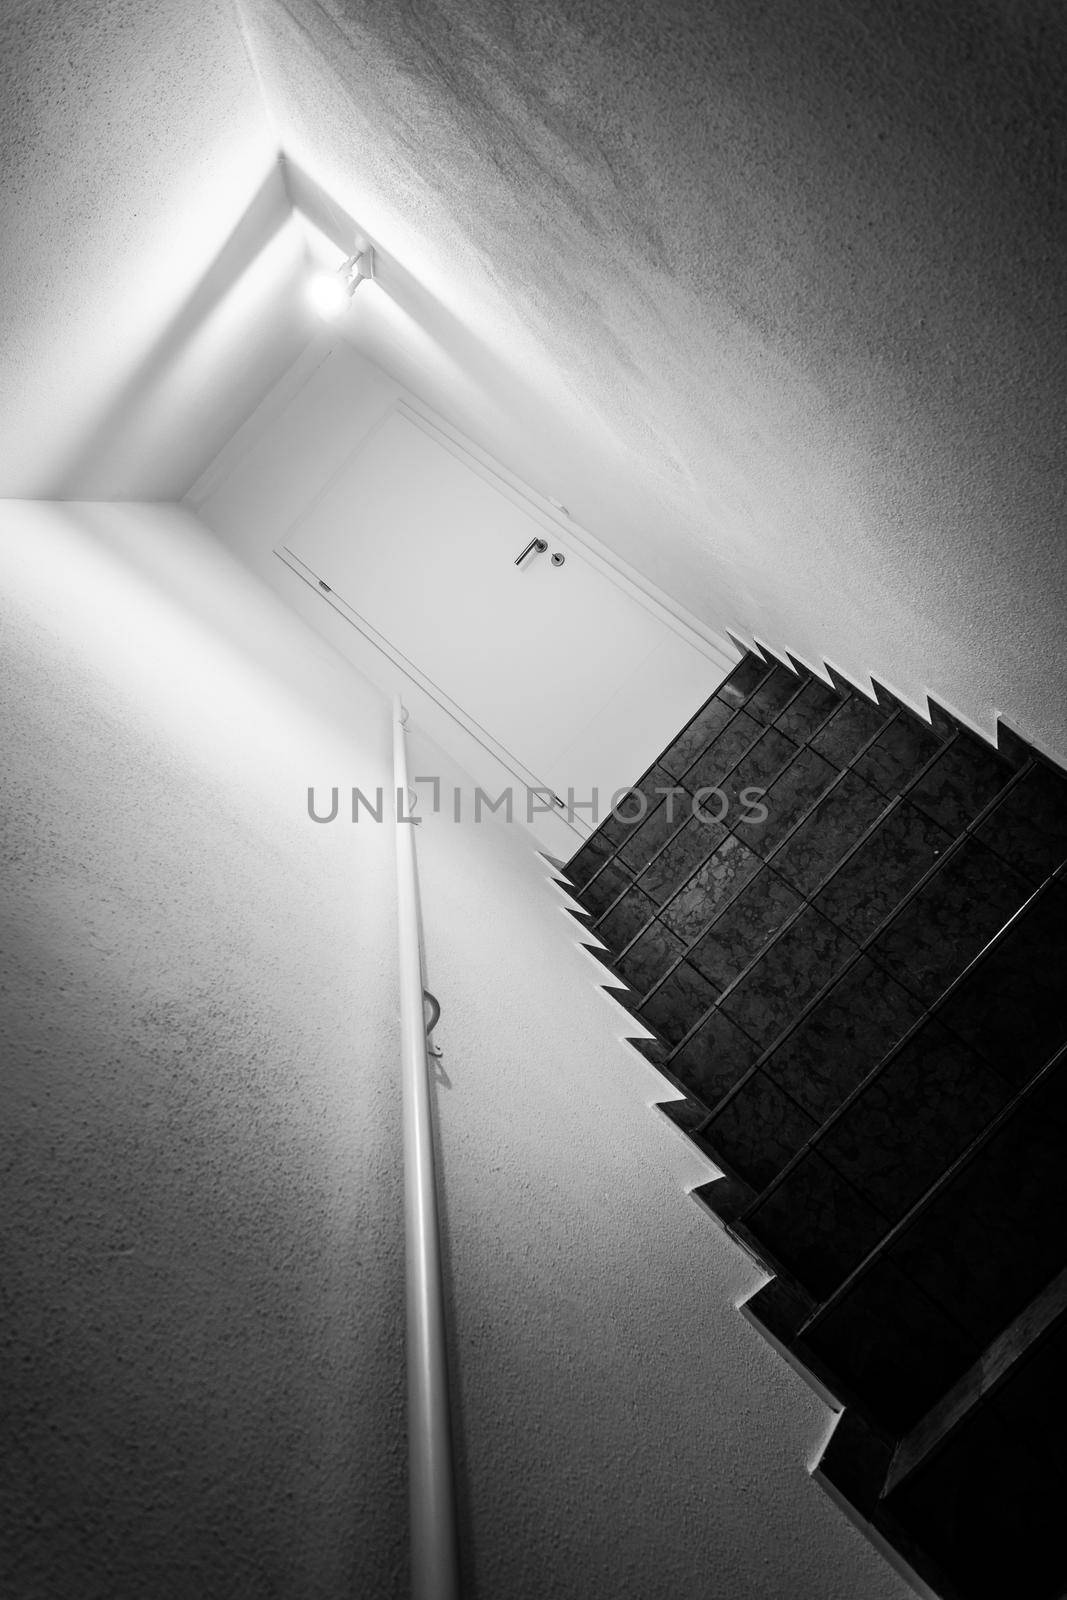 Basement stairway with railing. White door closed by Daxenbichler